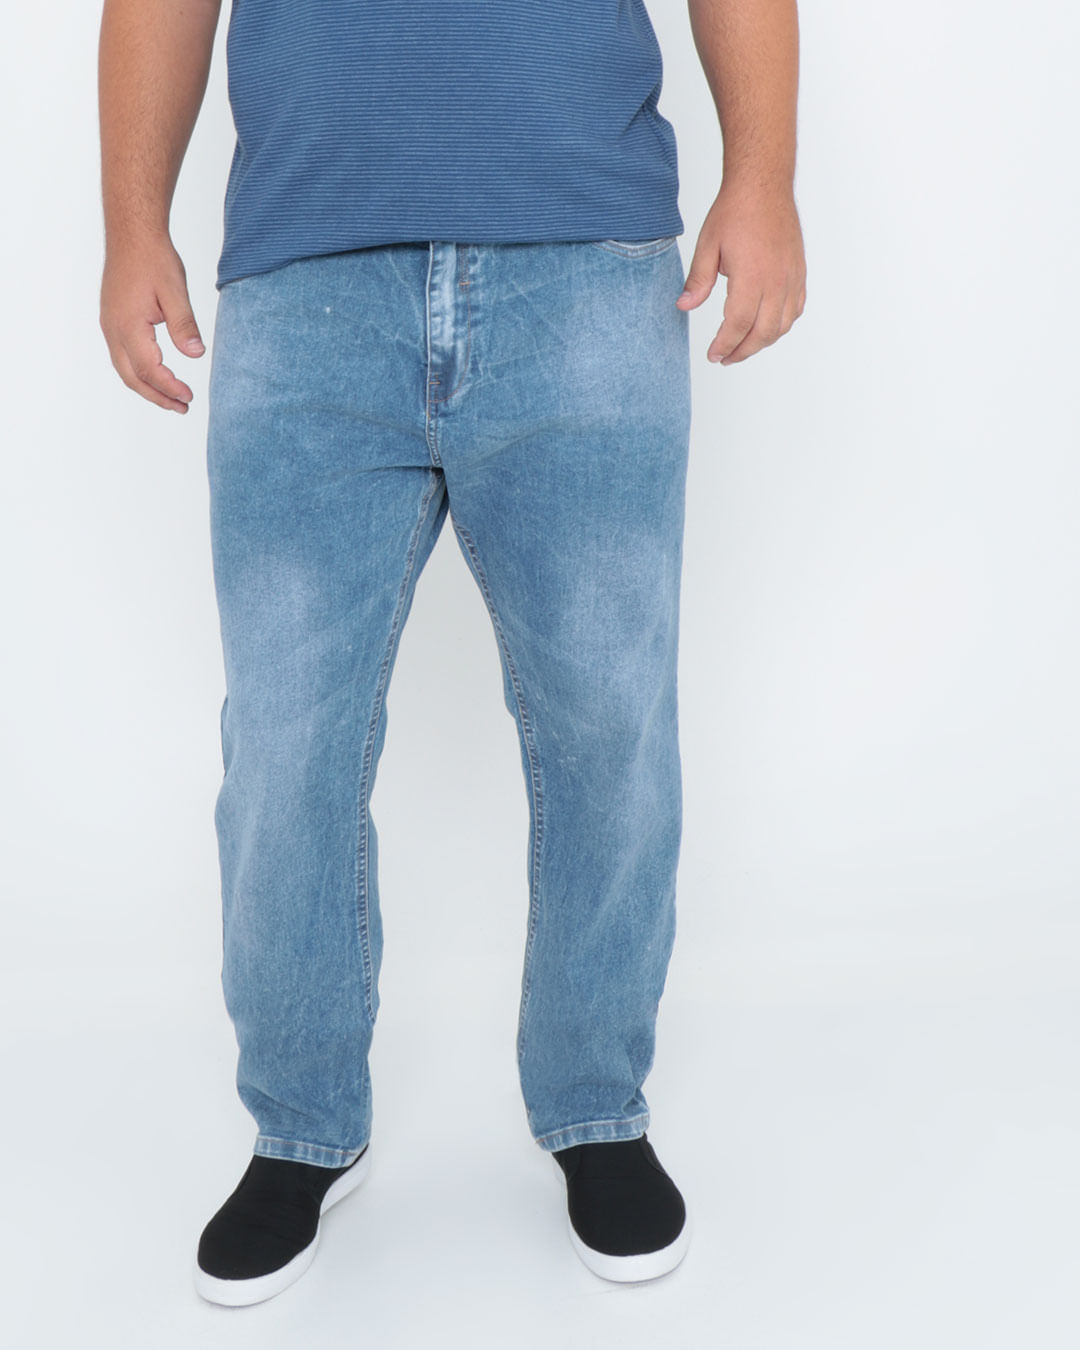 Calca-Jeans-Masculina-Plus-Size-Marmorizado-Azul